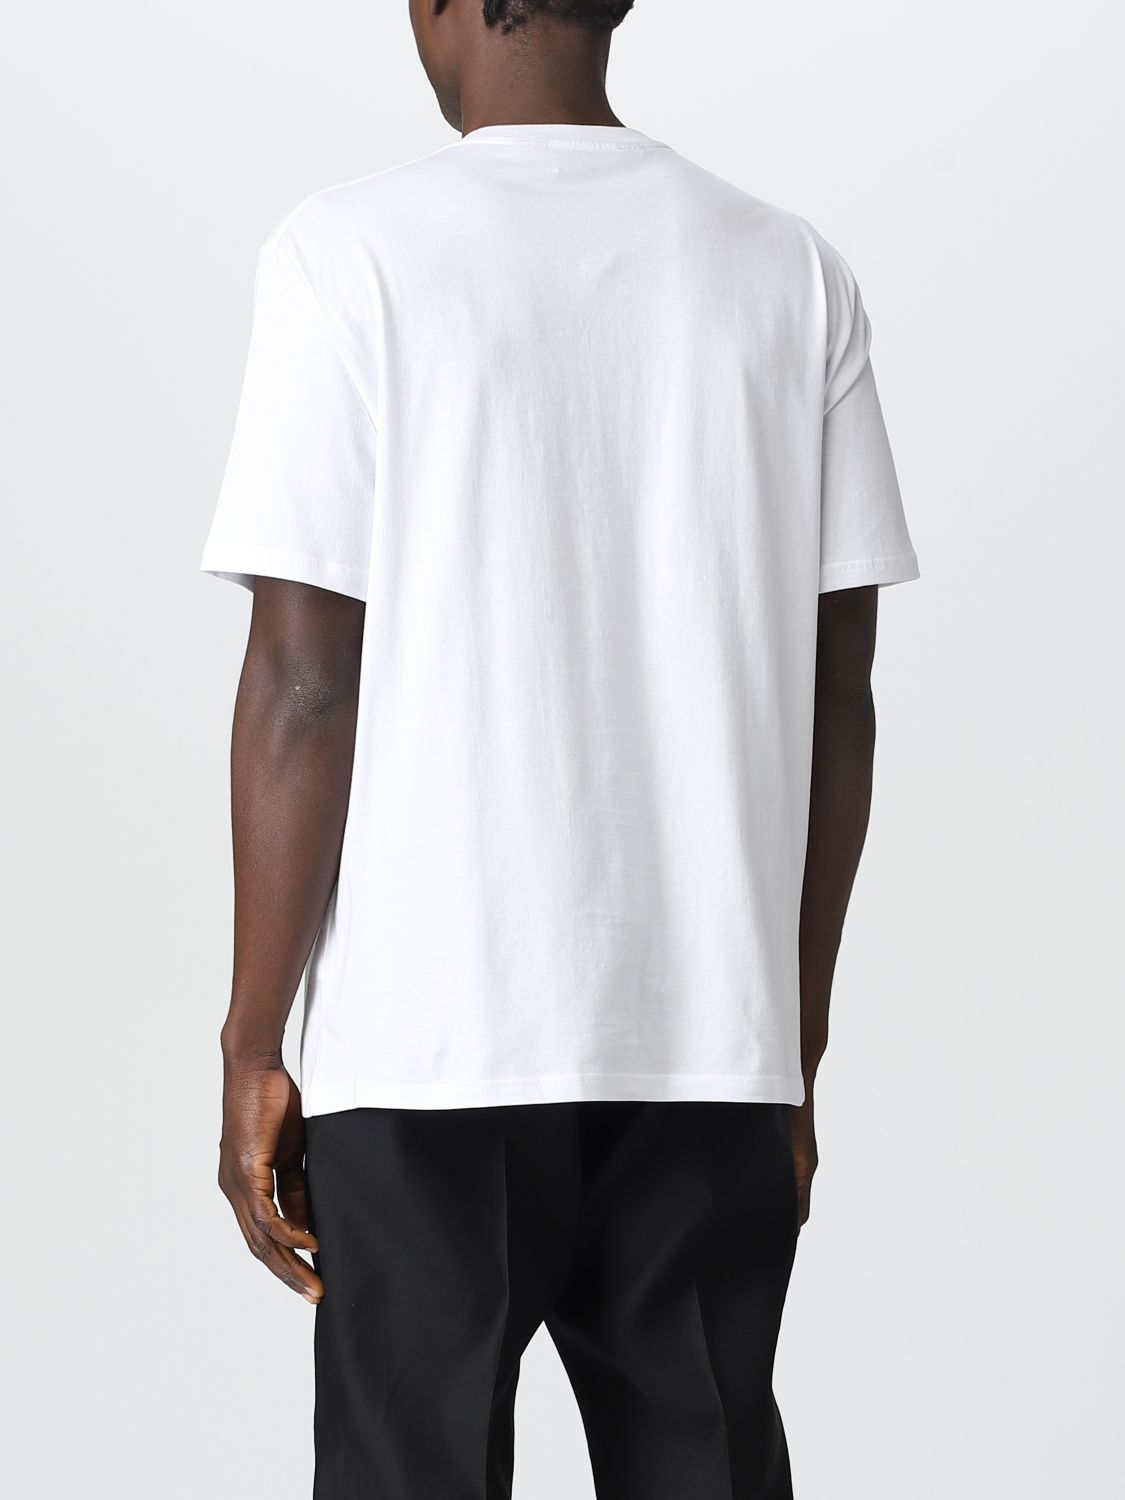 Meander salto Gewoon JUST CAVALLI: t-shirt for man - White | Just Cavalli t-shirt 74OBHE05CJ110  online on GIGLIO.COM